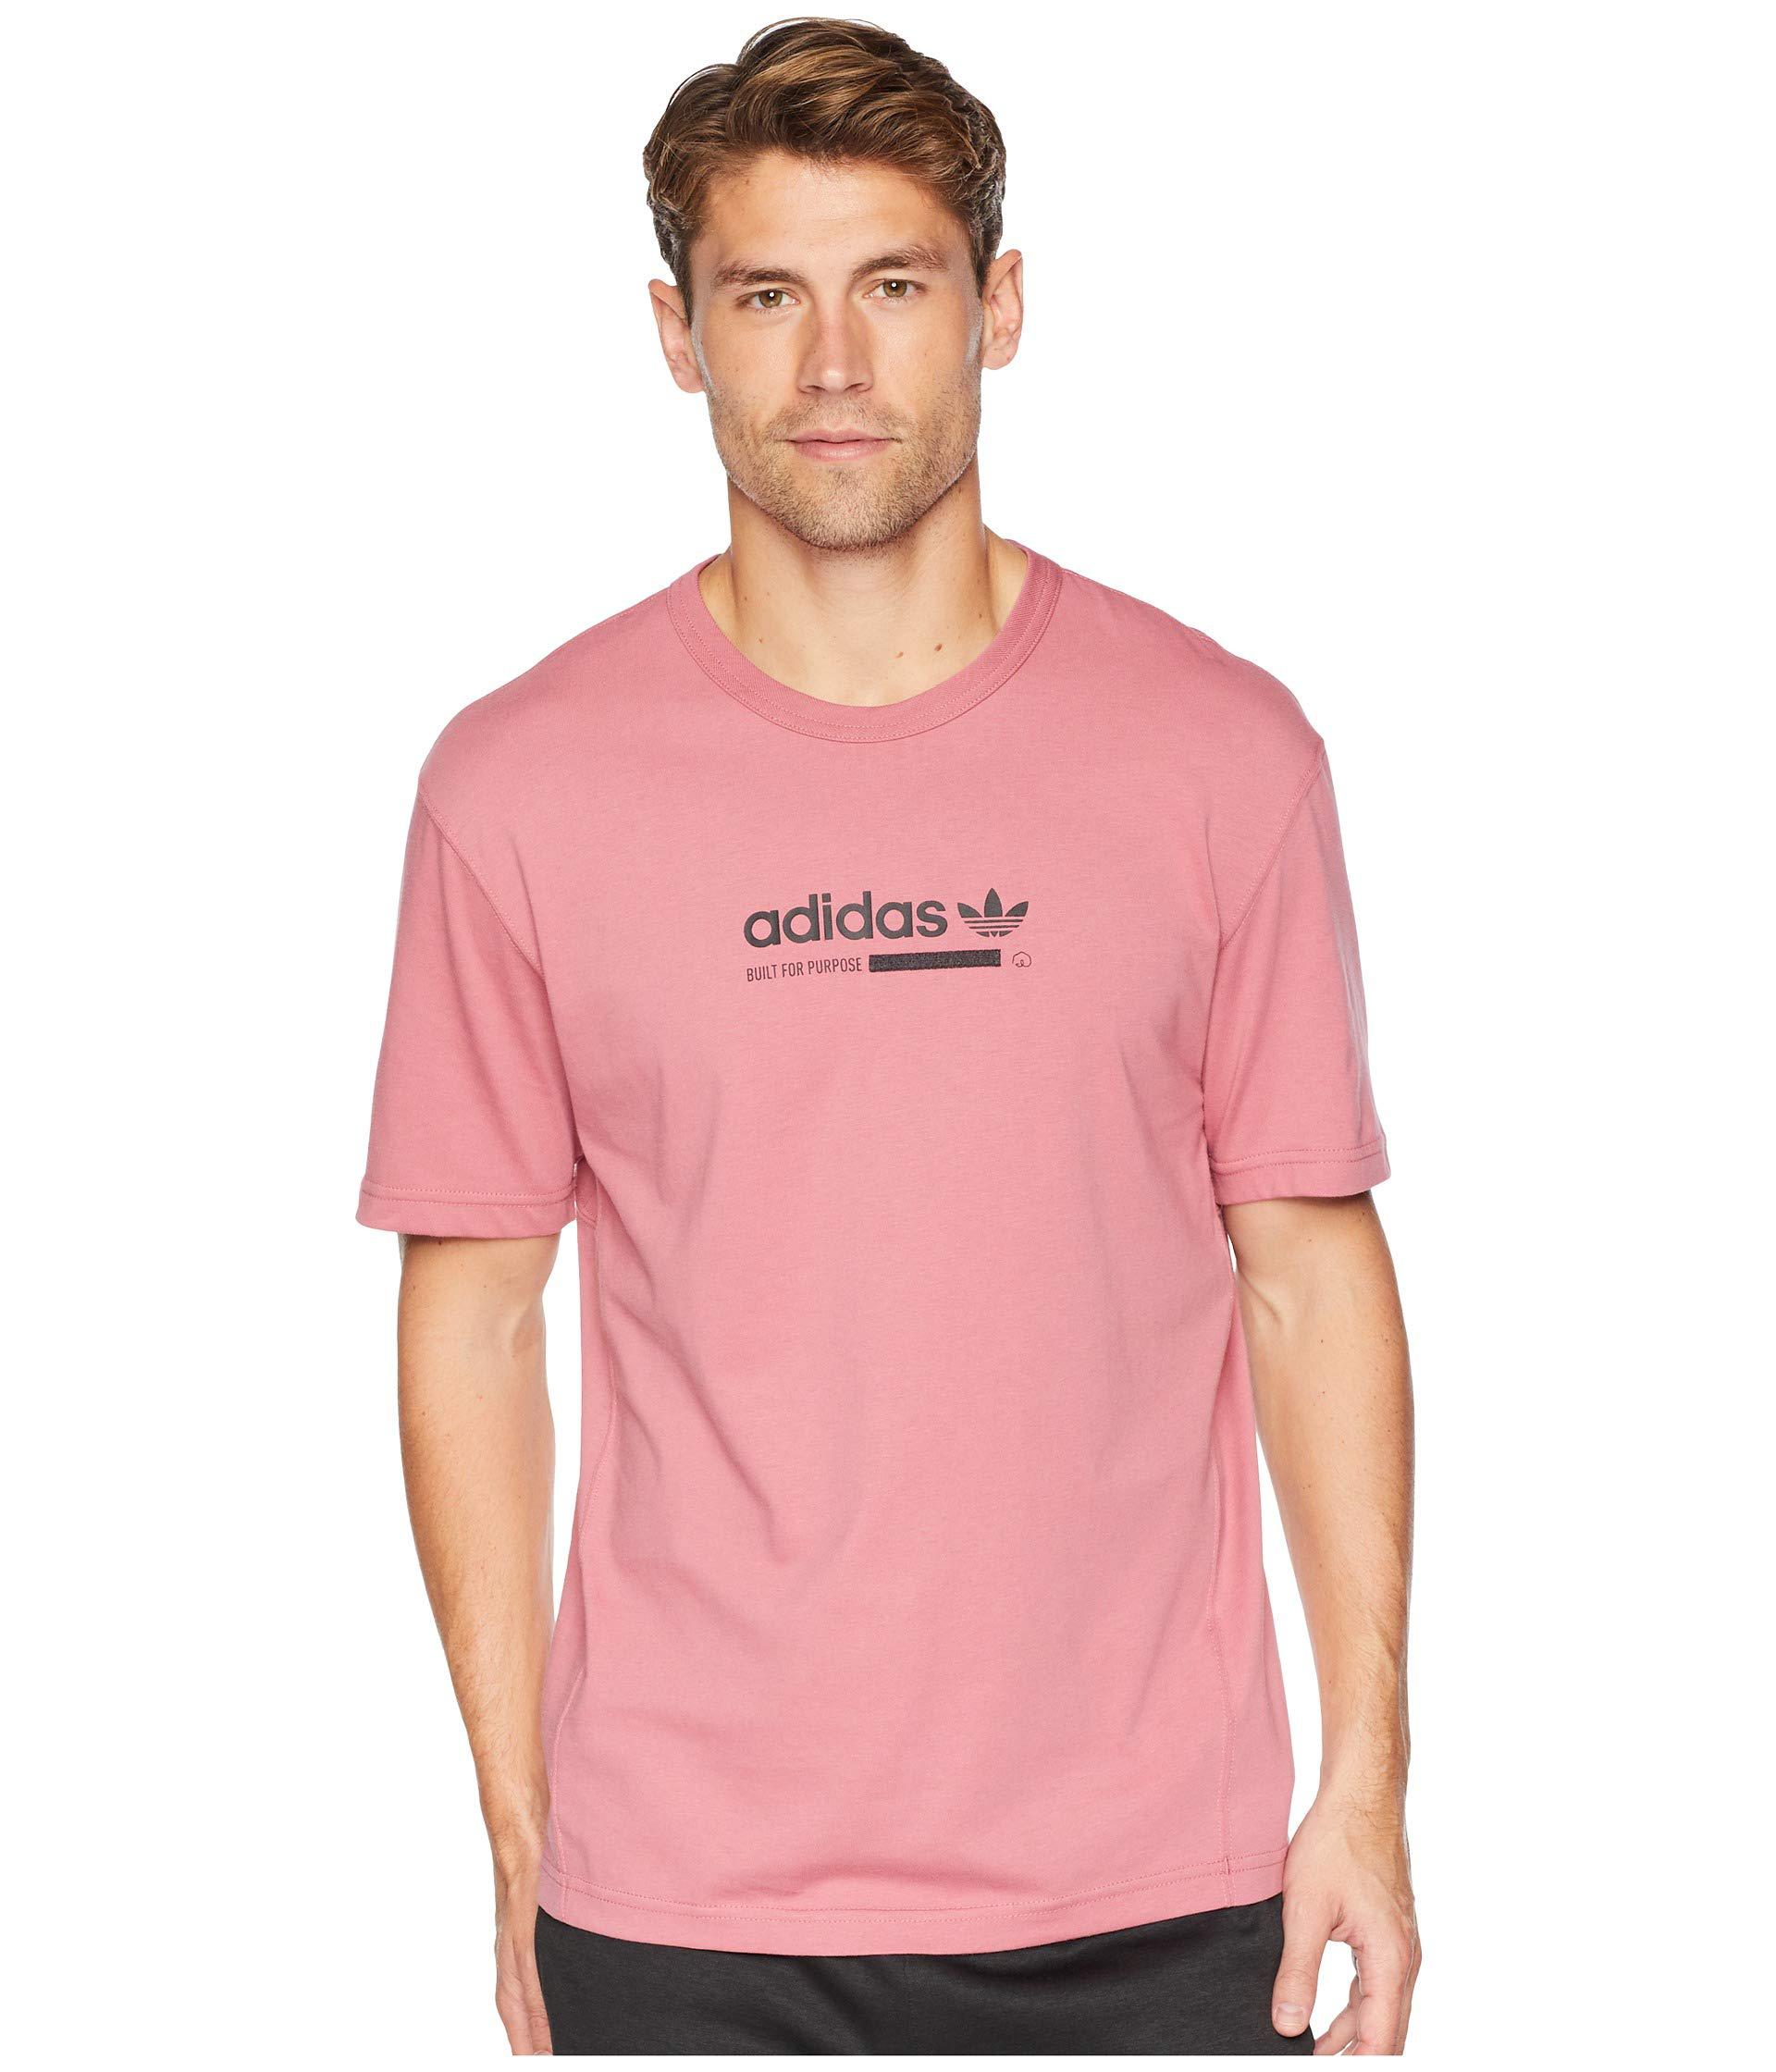 trace pink adidas shirt